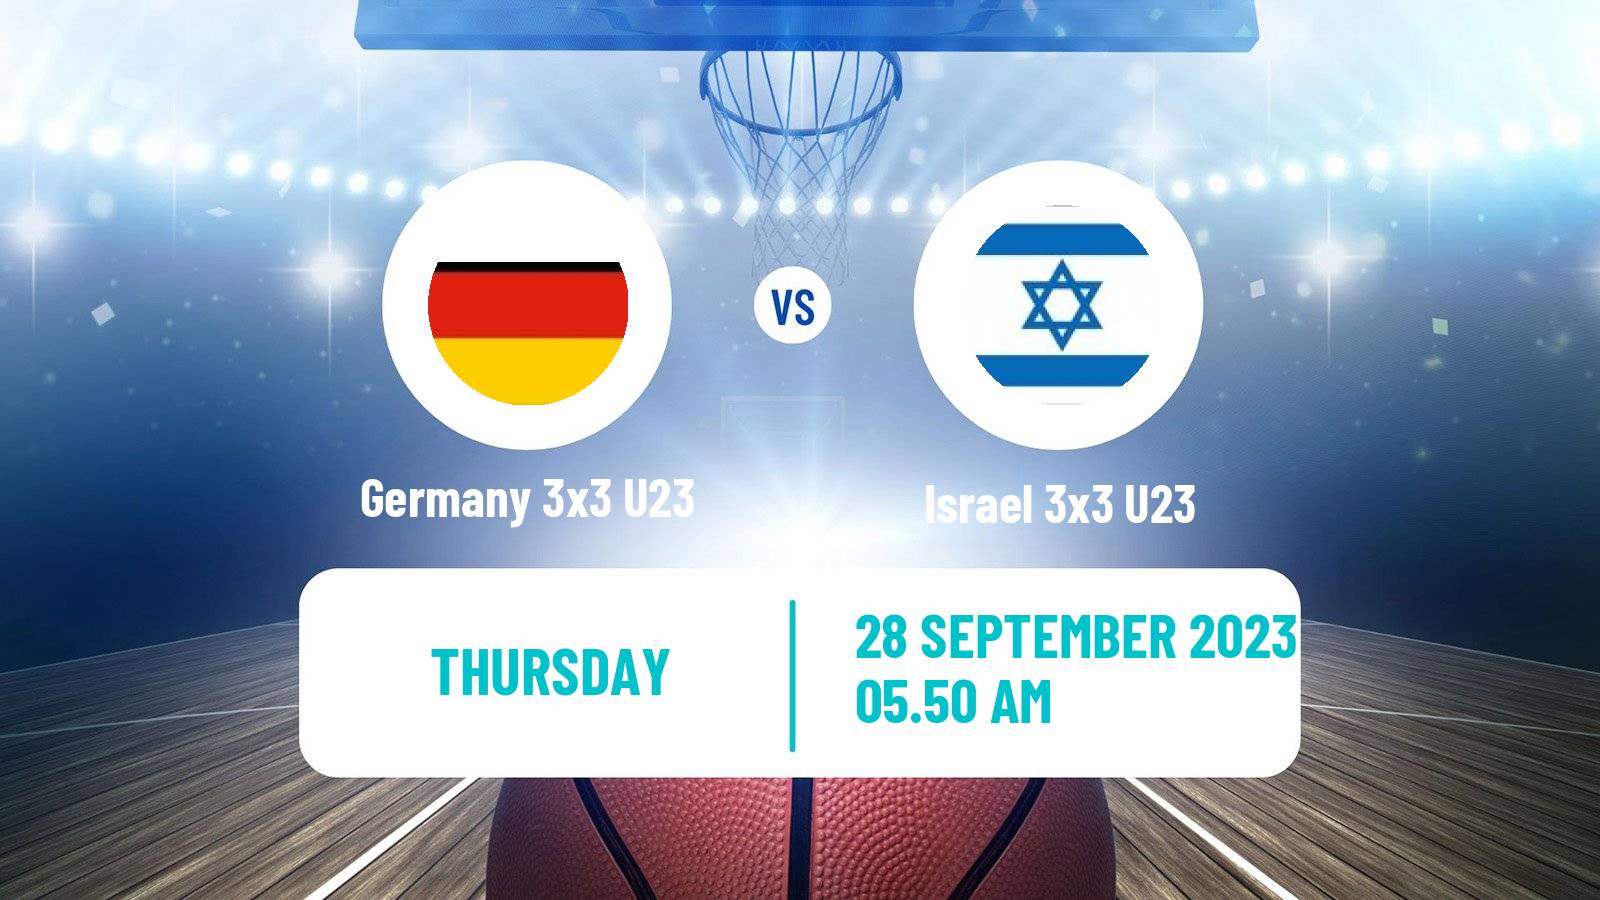 Basketball World Cup Basketball 3x3 U23 Germany 3x3 U23 - Israel 3x3 U23